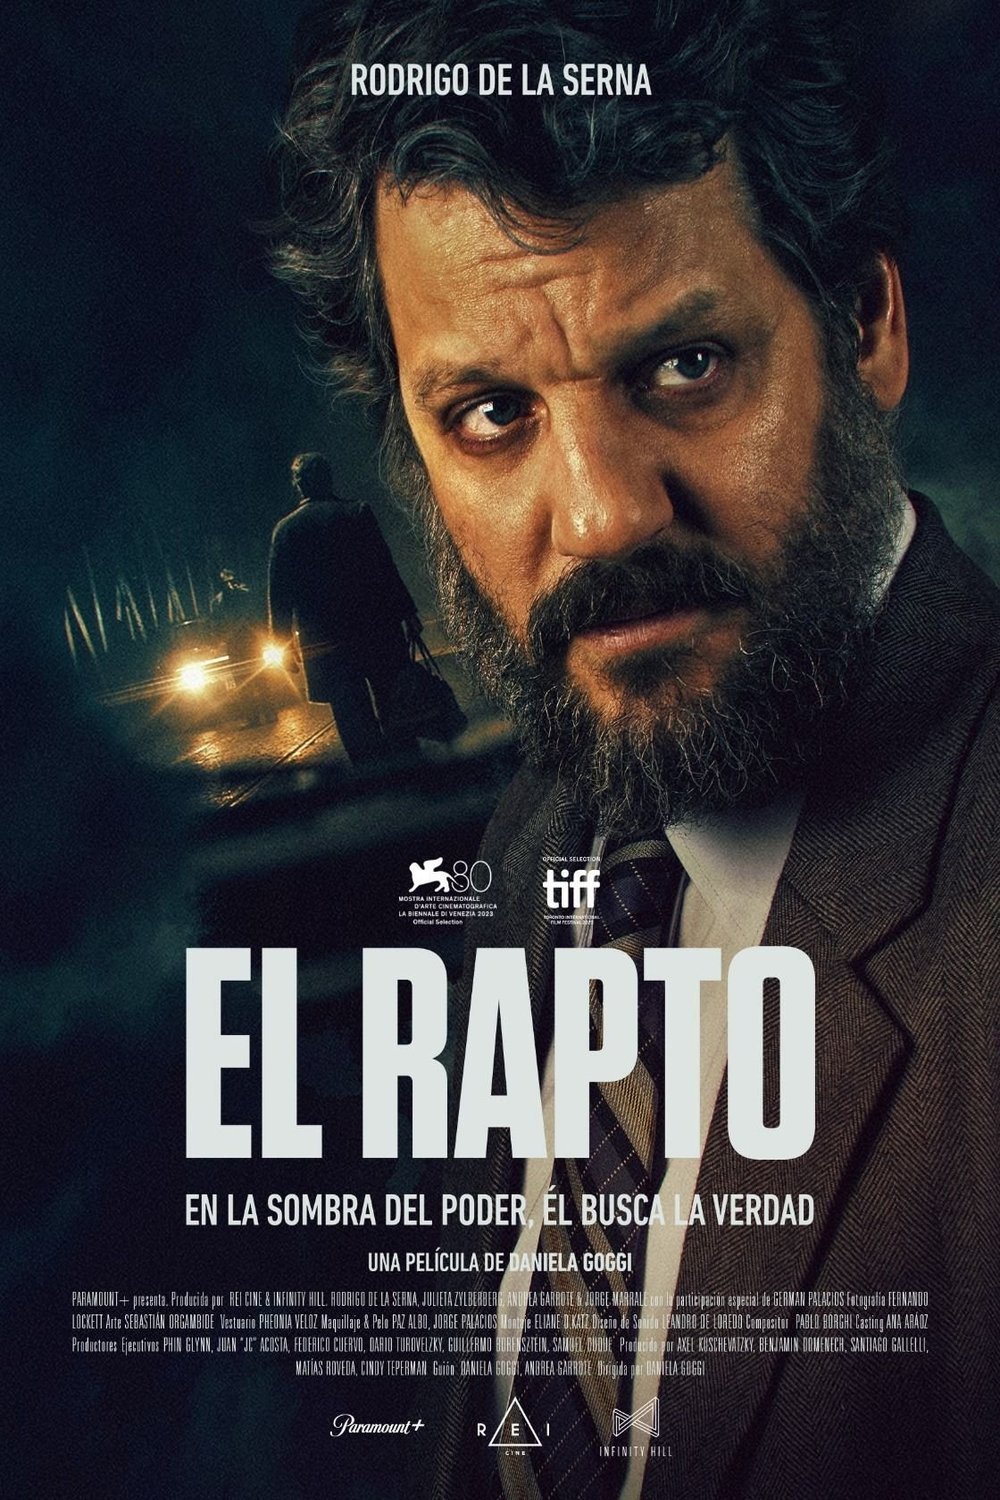 Spanish poster of the movie El rapto